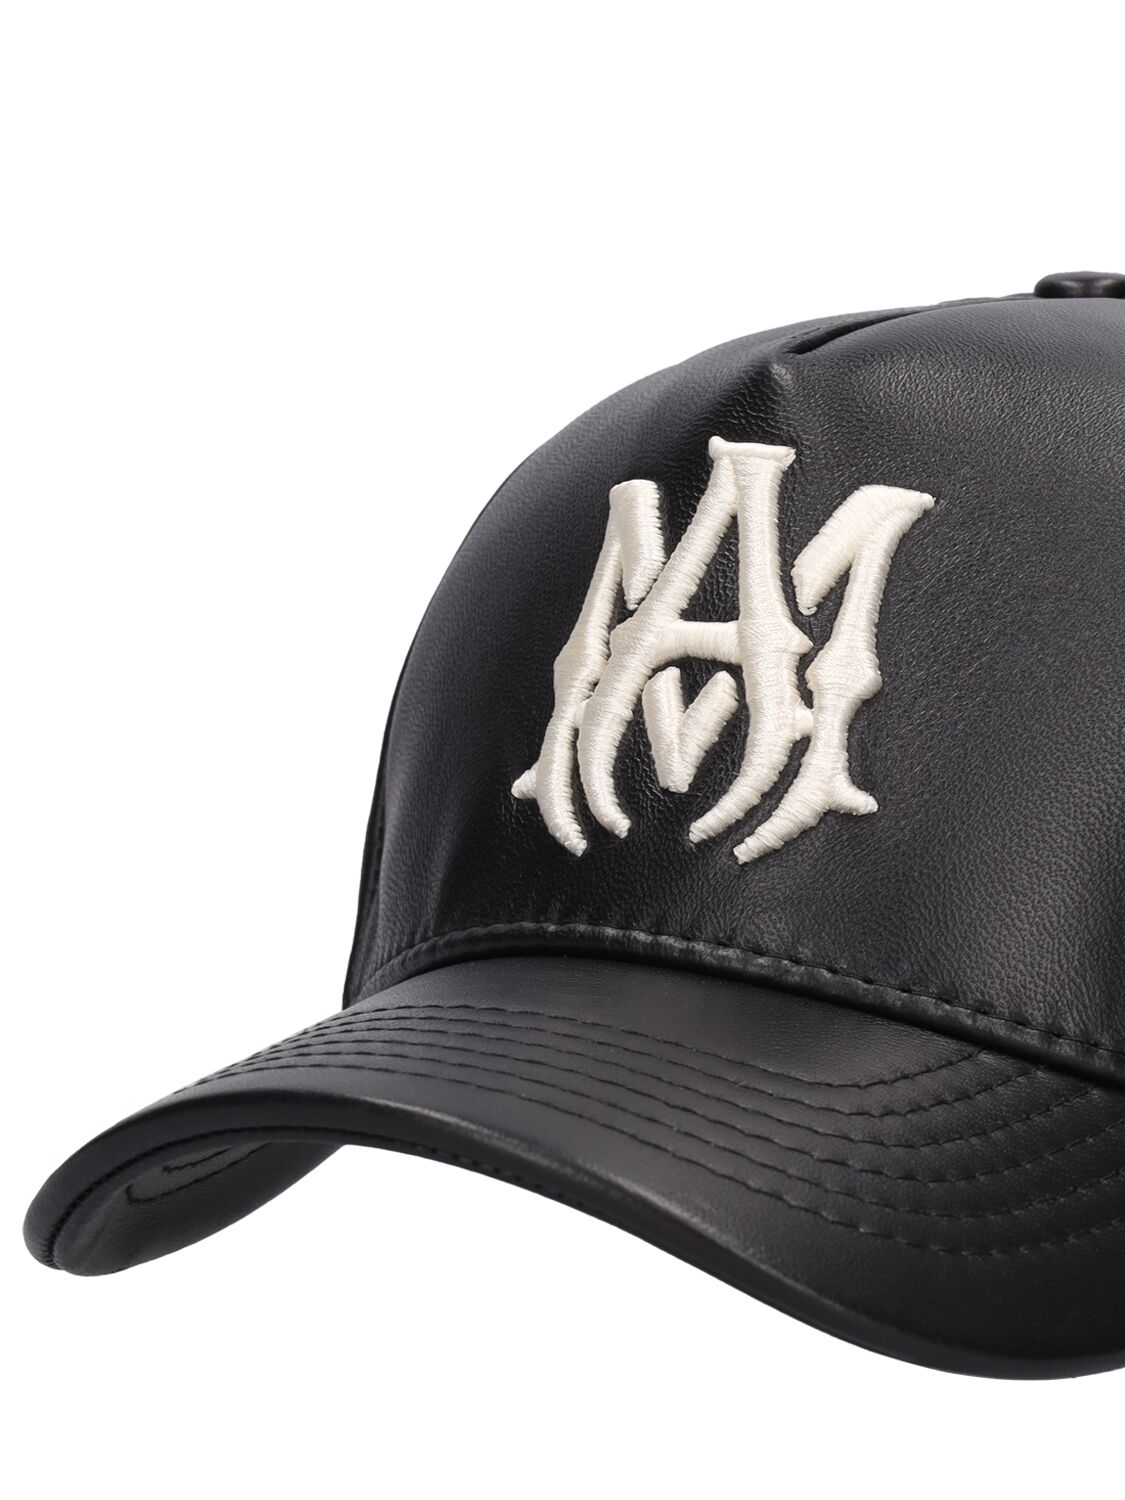 Shop Amiri Ma Logo Leather Baseball Cap In Black